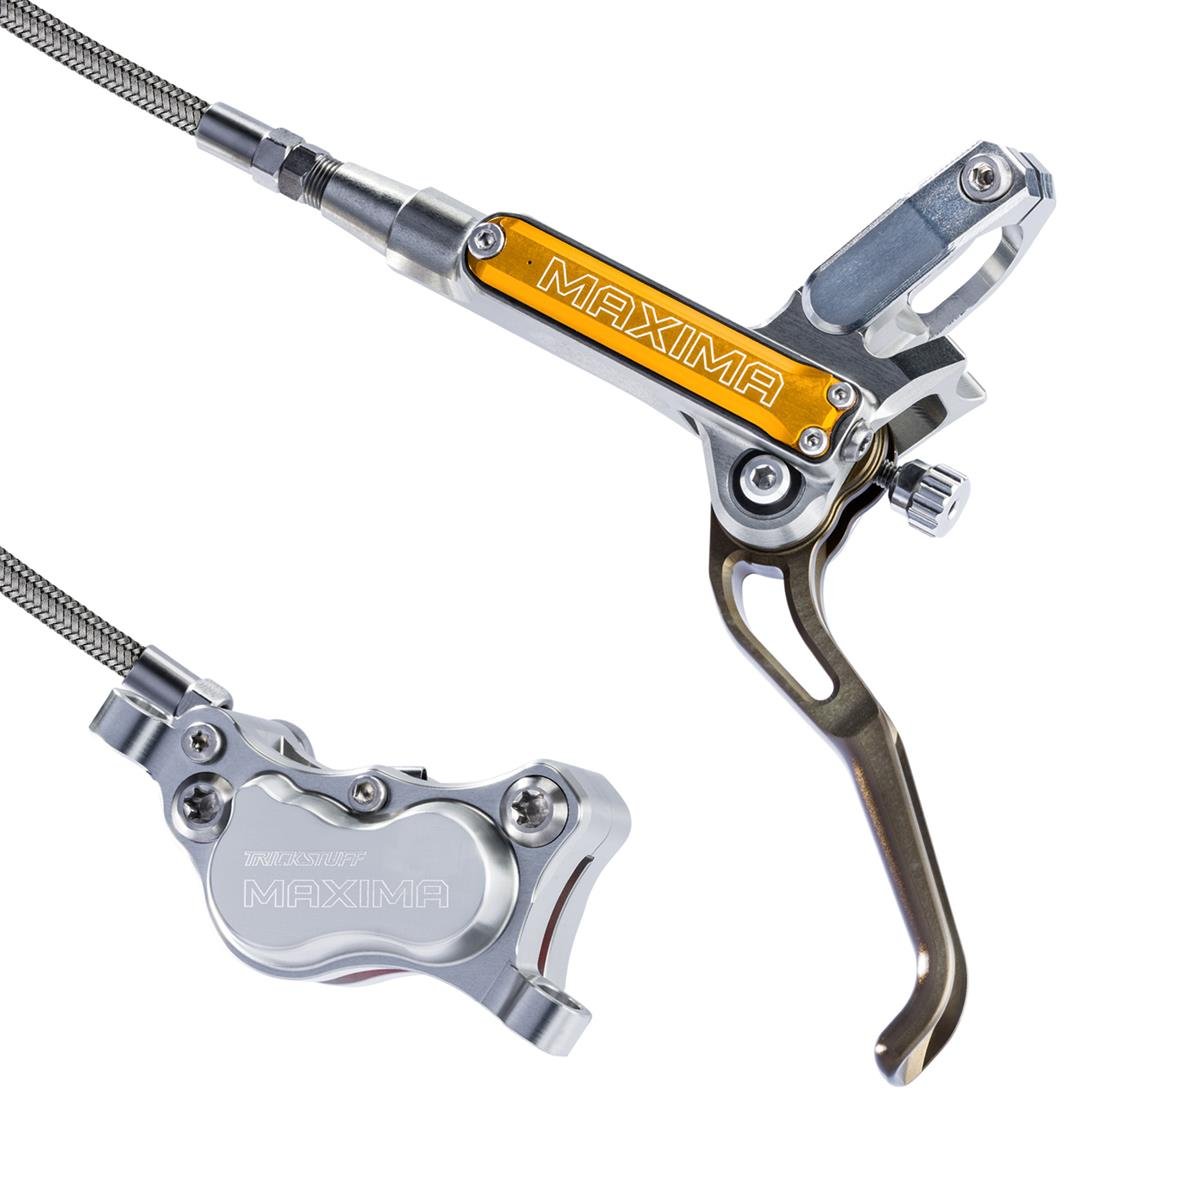 Trickstuff MTB Brake Set Maxima Silver/Orange, 4-Piston, steel braided hose for internal routing